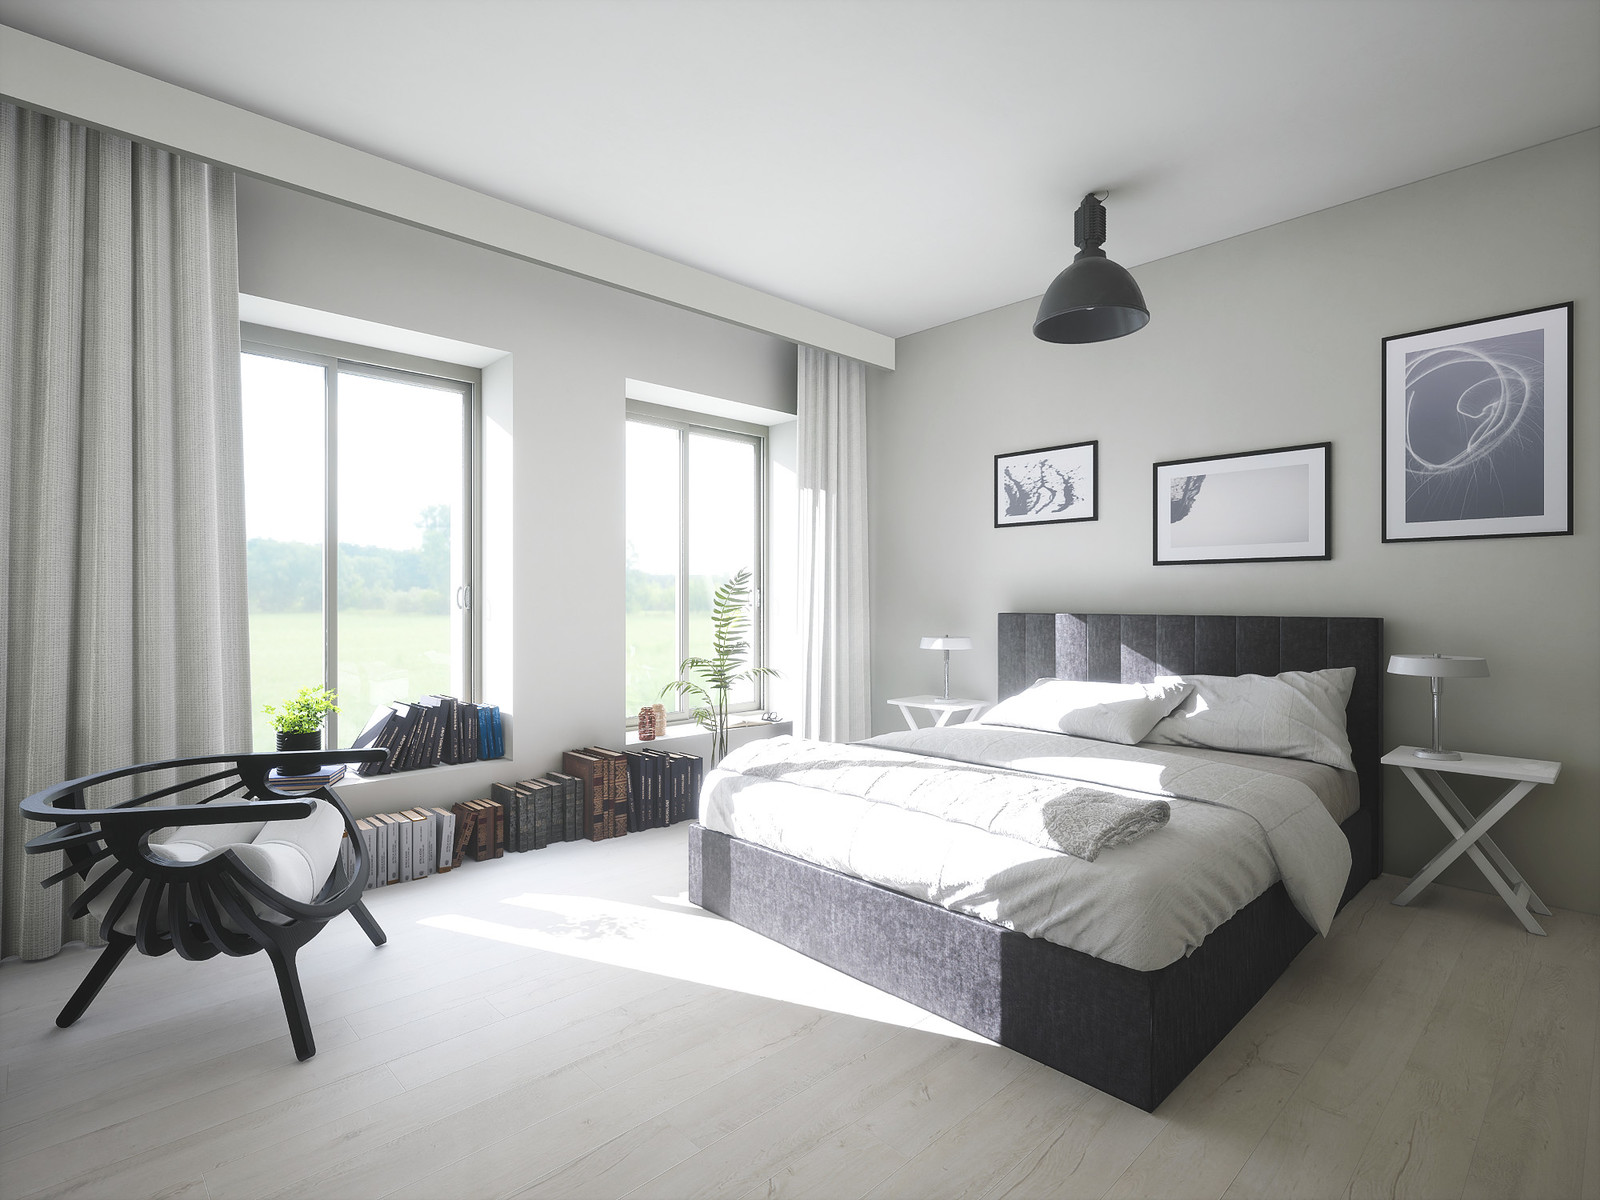 Simple Bedroom in Unreal Engine 4